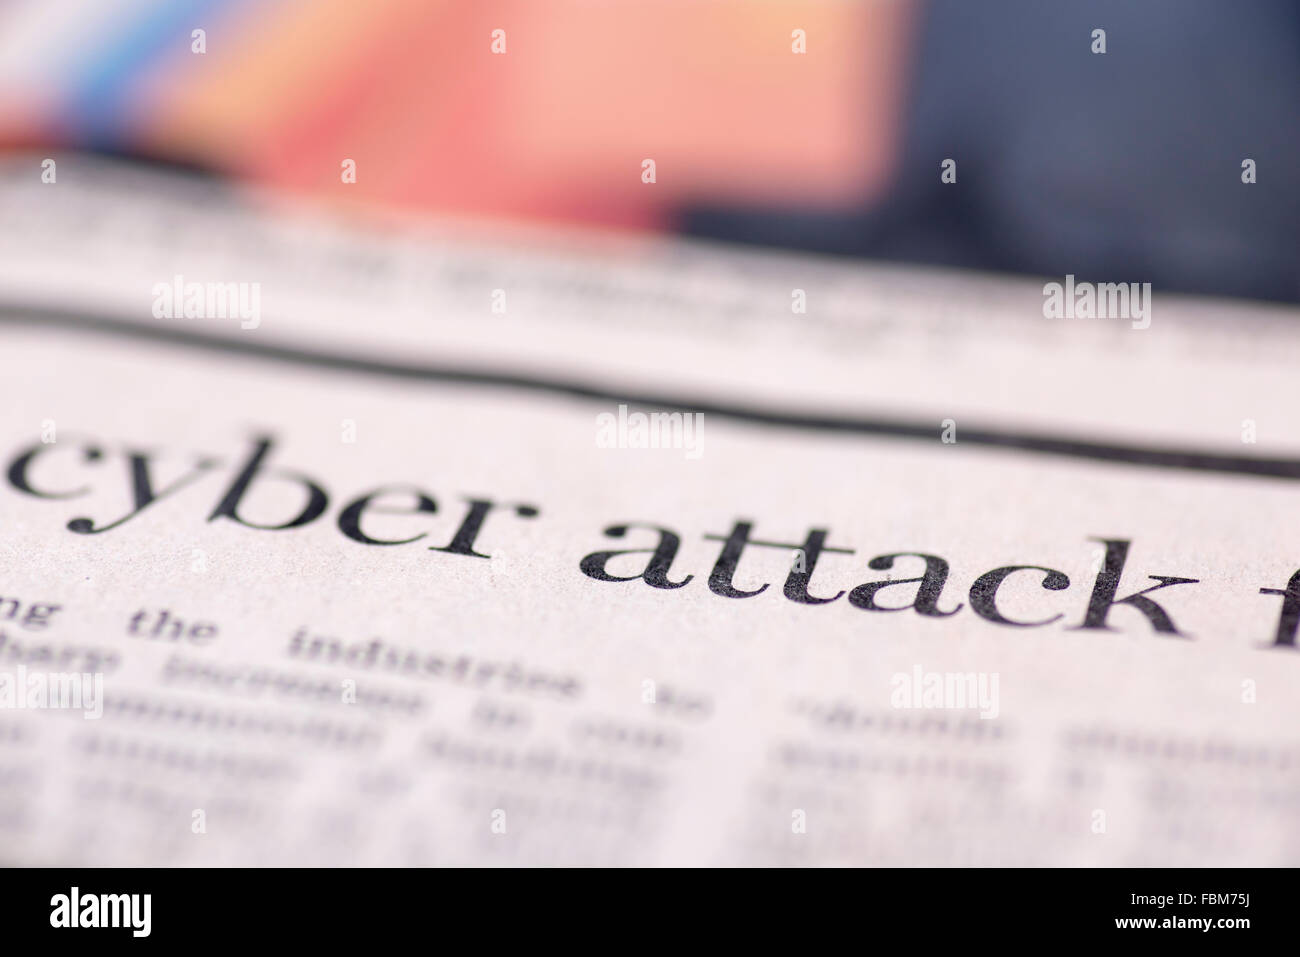 Cyber attack written newspaper Stock Photo